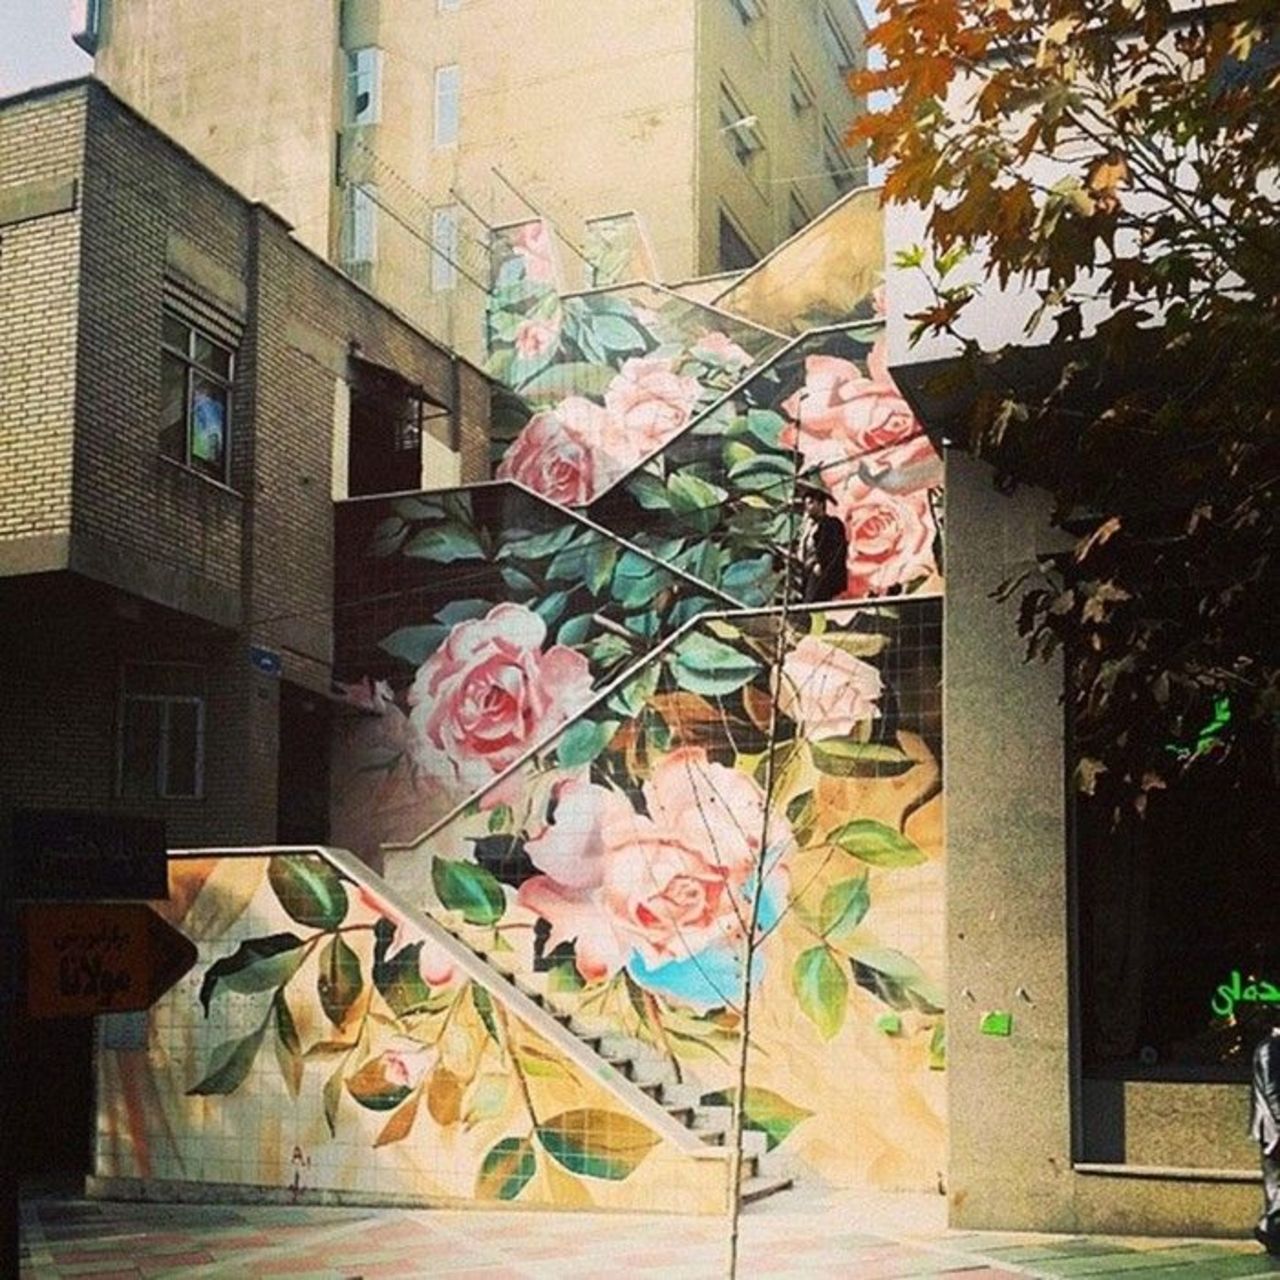 The Streets are what we make it...  •  #streetart #graffiti #art #flowers #funky #dope . : https://t.co/mtkjSauXHx